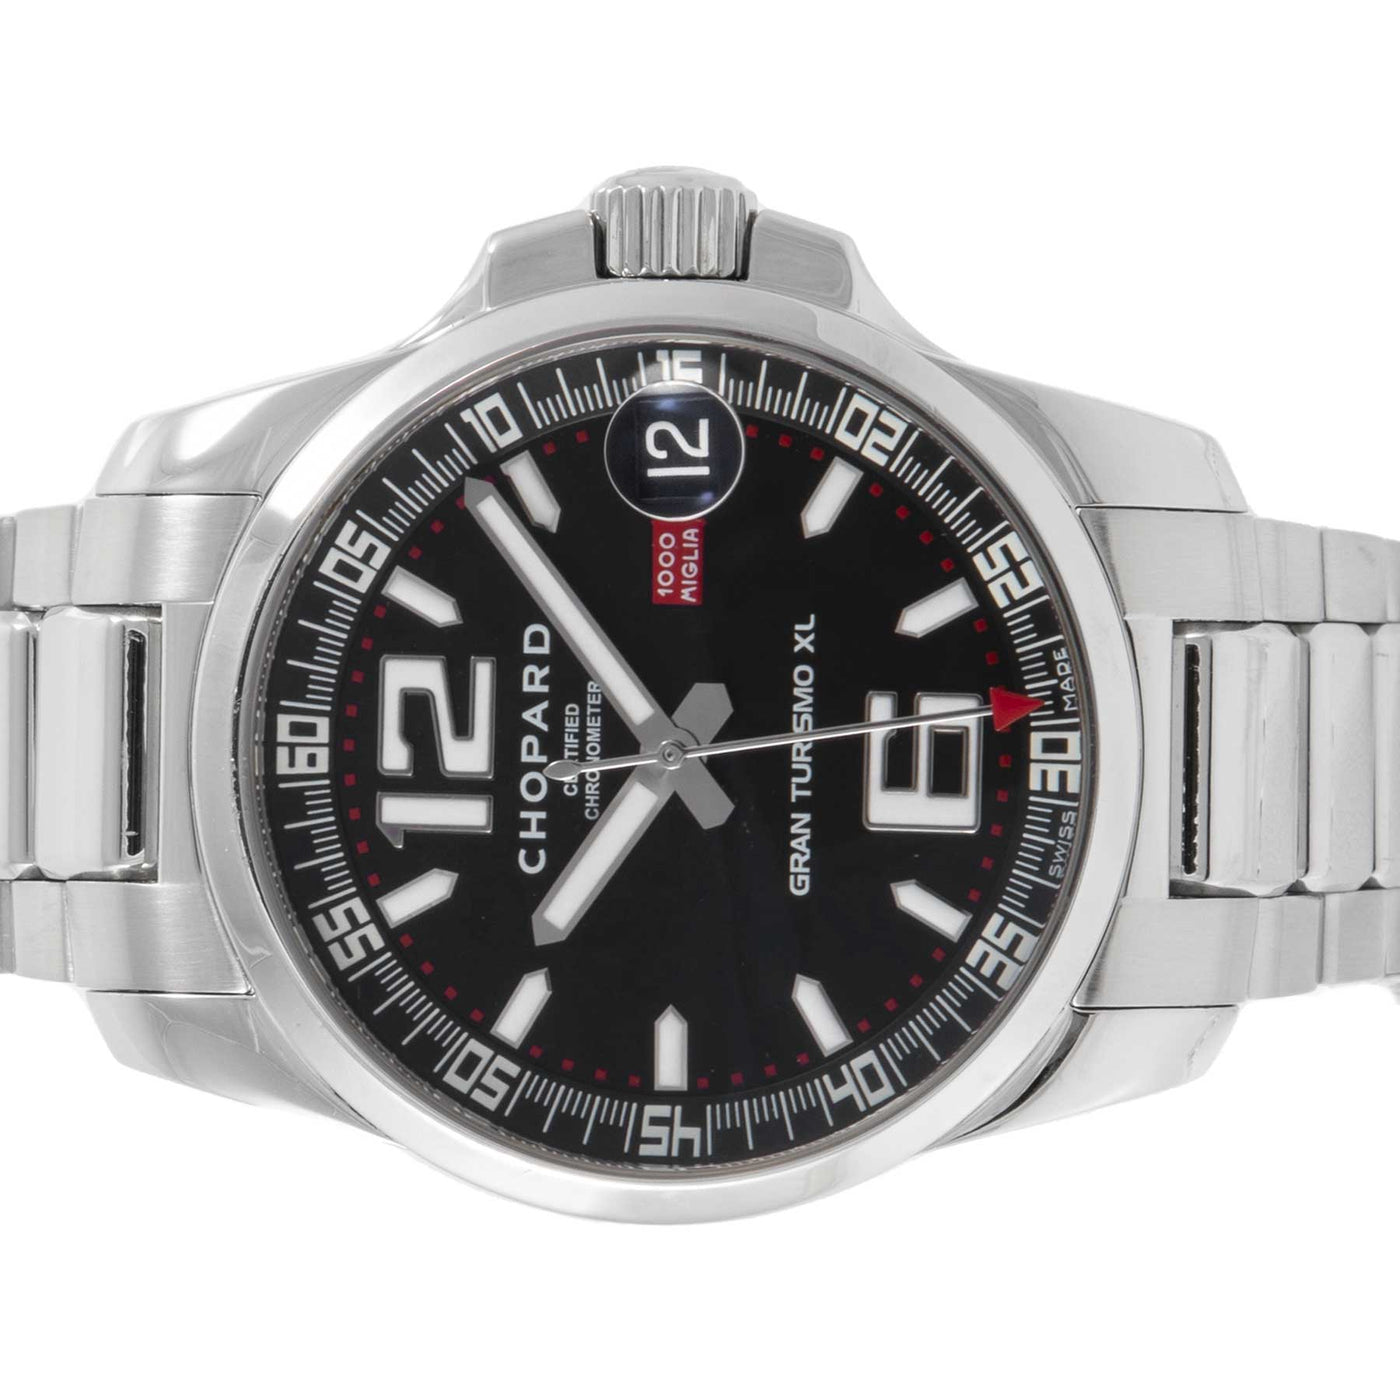 Chopard Mille Miglia Gran Turismo XL158997-3001 | Timepiece360